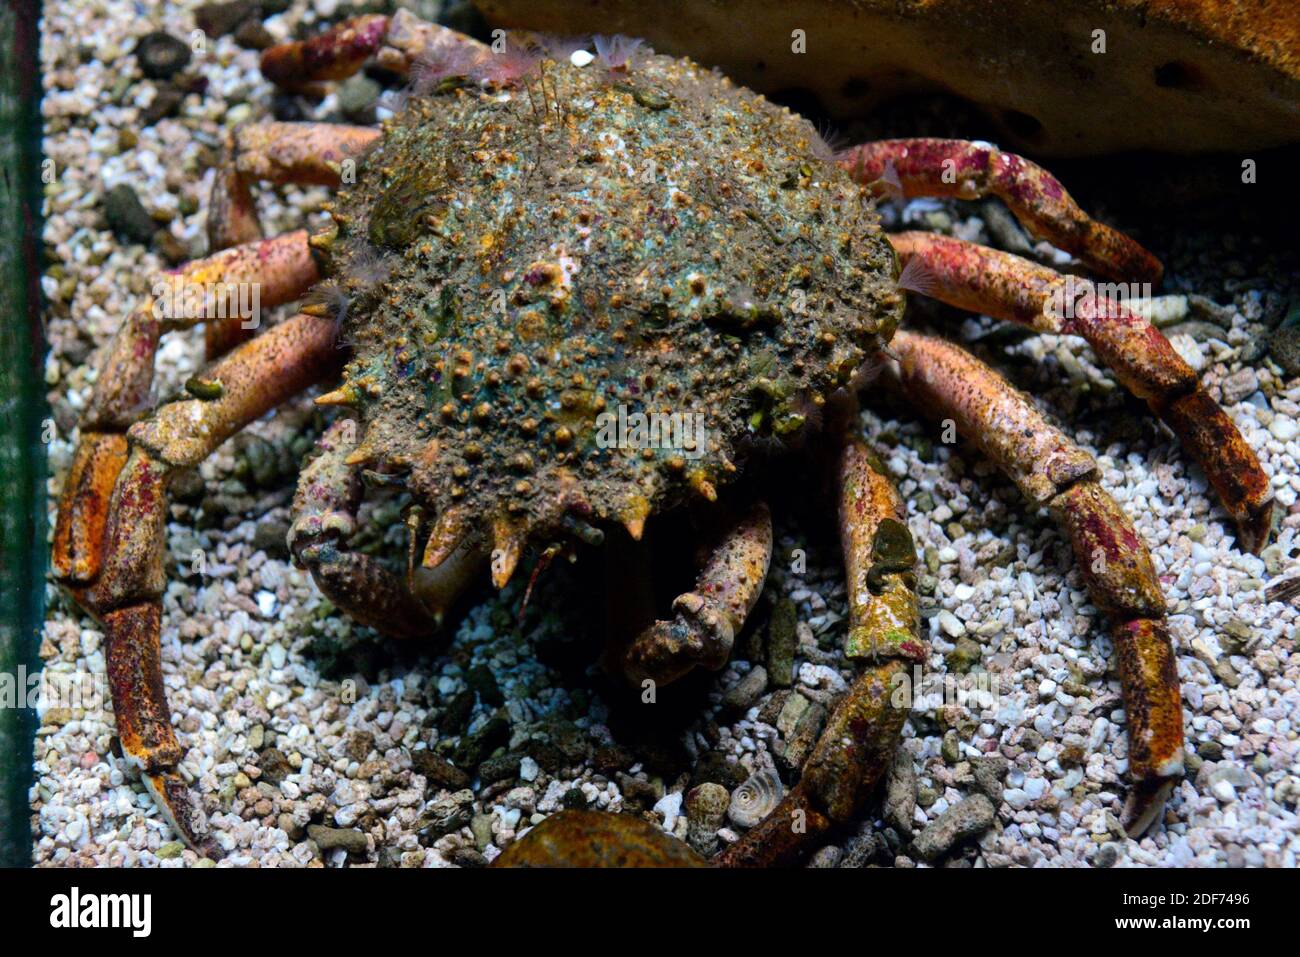 Spiny spider crab (Maja squinado) is an edible crab native to eastern Atlantic Ocean and Mediterranean Sea. Stock Photo